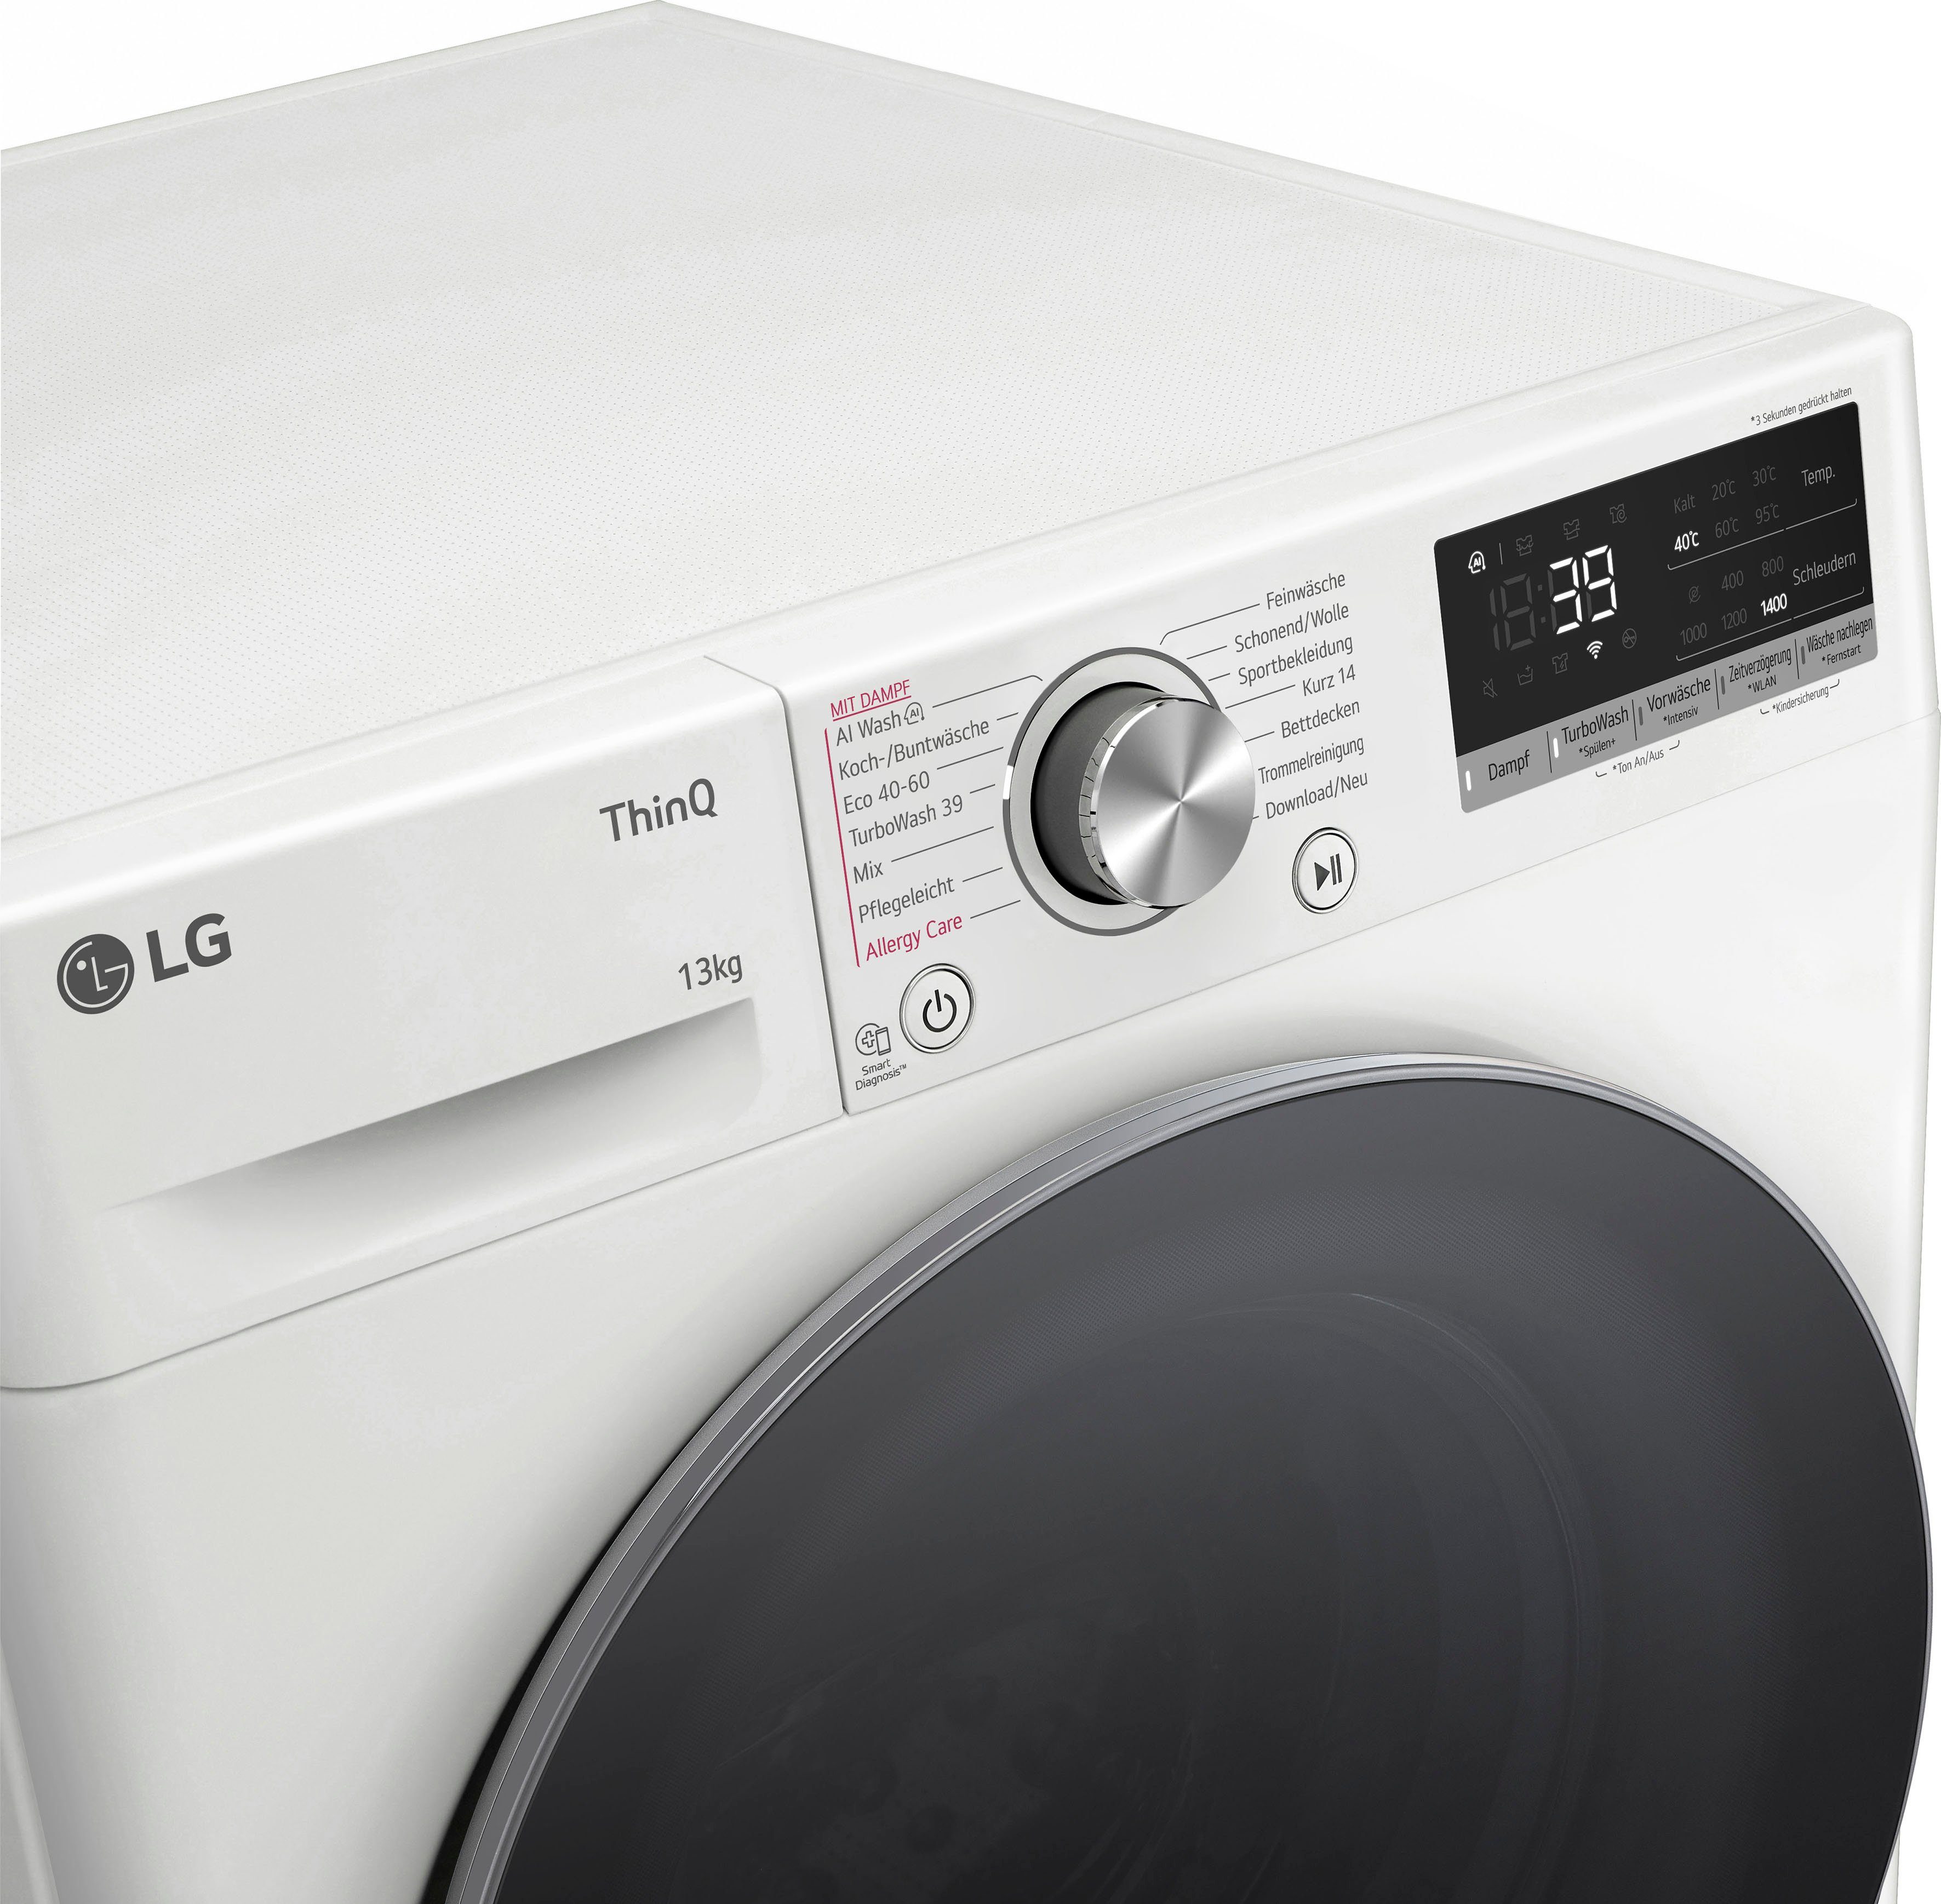 7 LG Serie Waschmaschine 1400 13 kg, F4WR7031, U/min